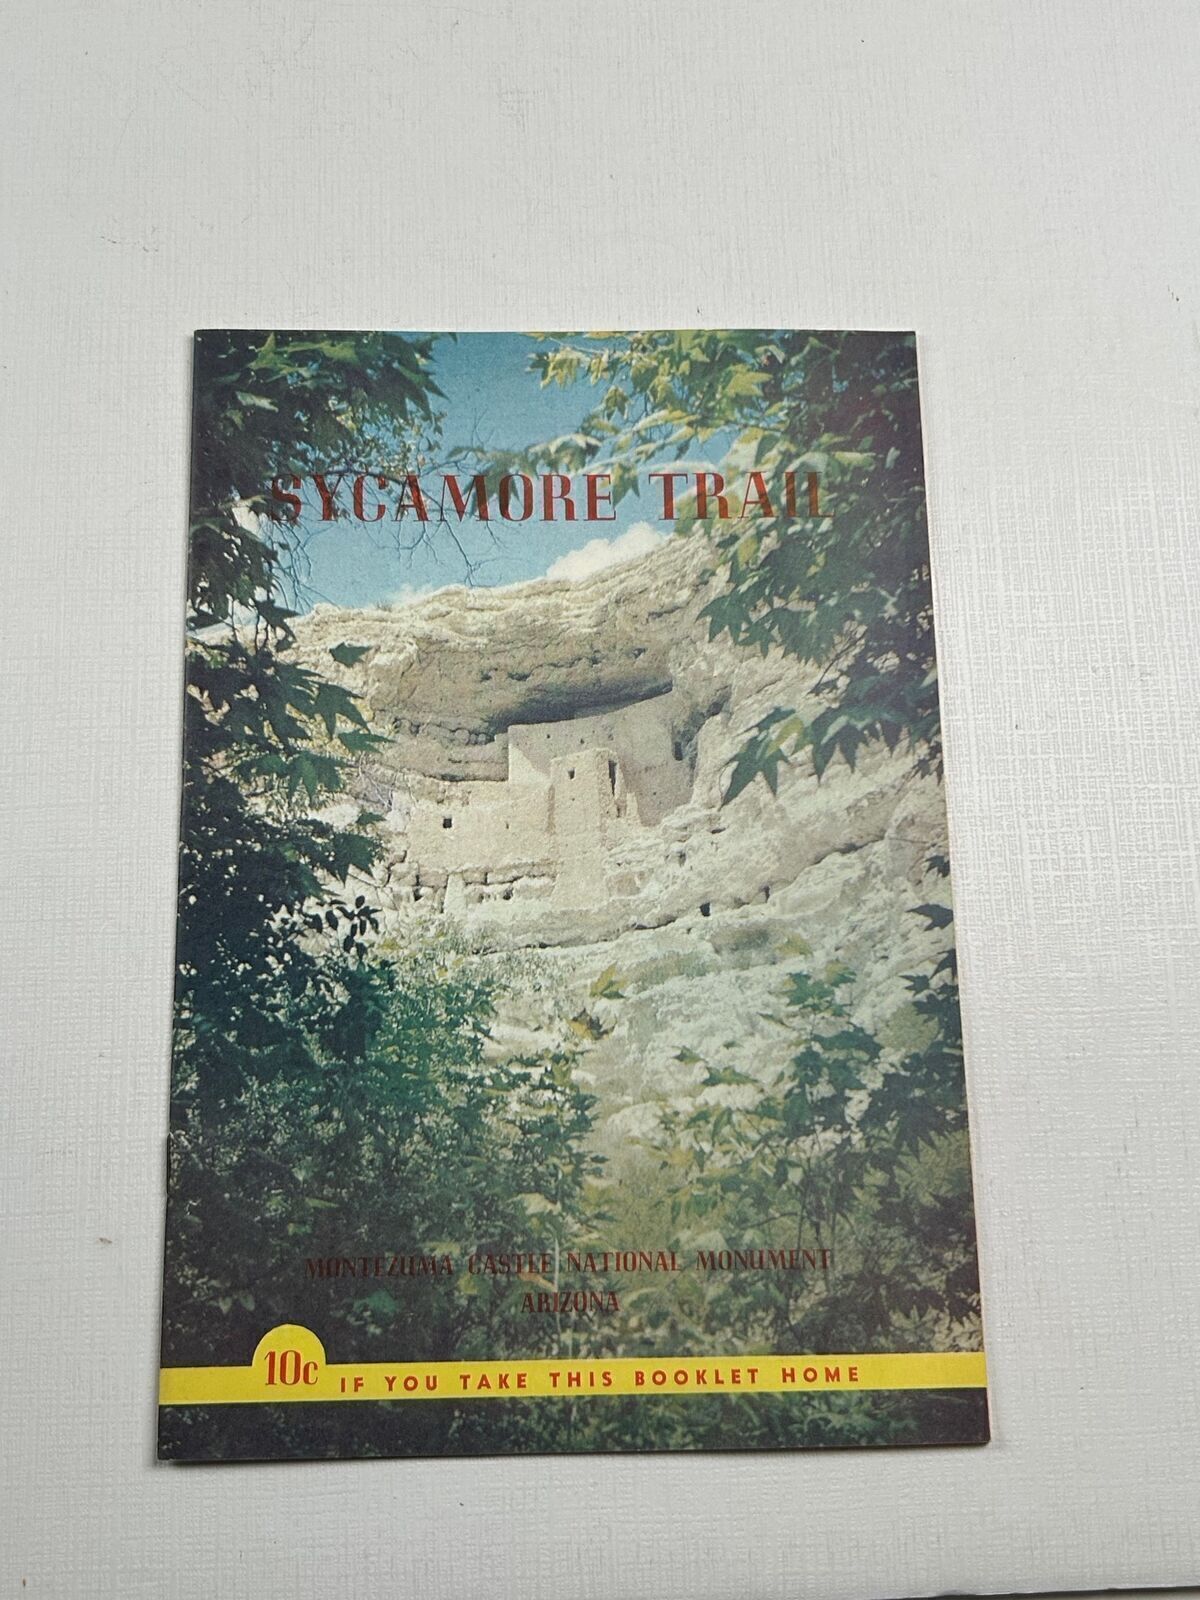 Vintage Travel Brochure Sycamore Trail Montezuma Castle Ntl Monument AZ 1959 